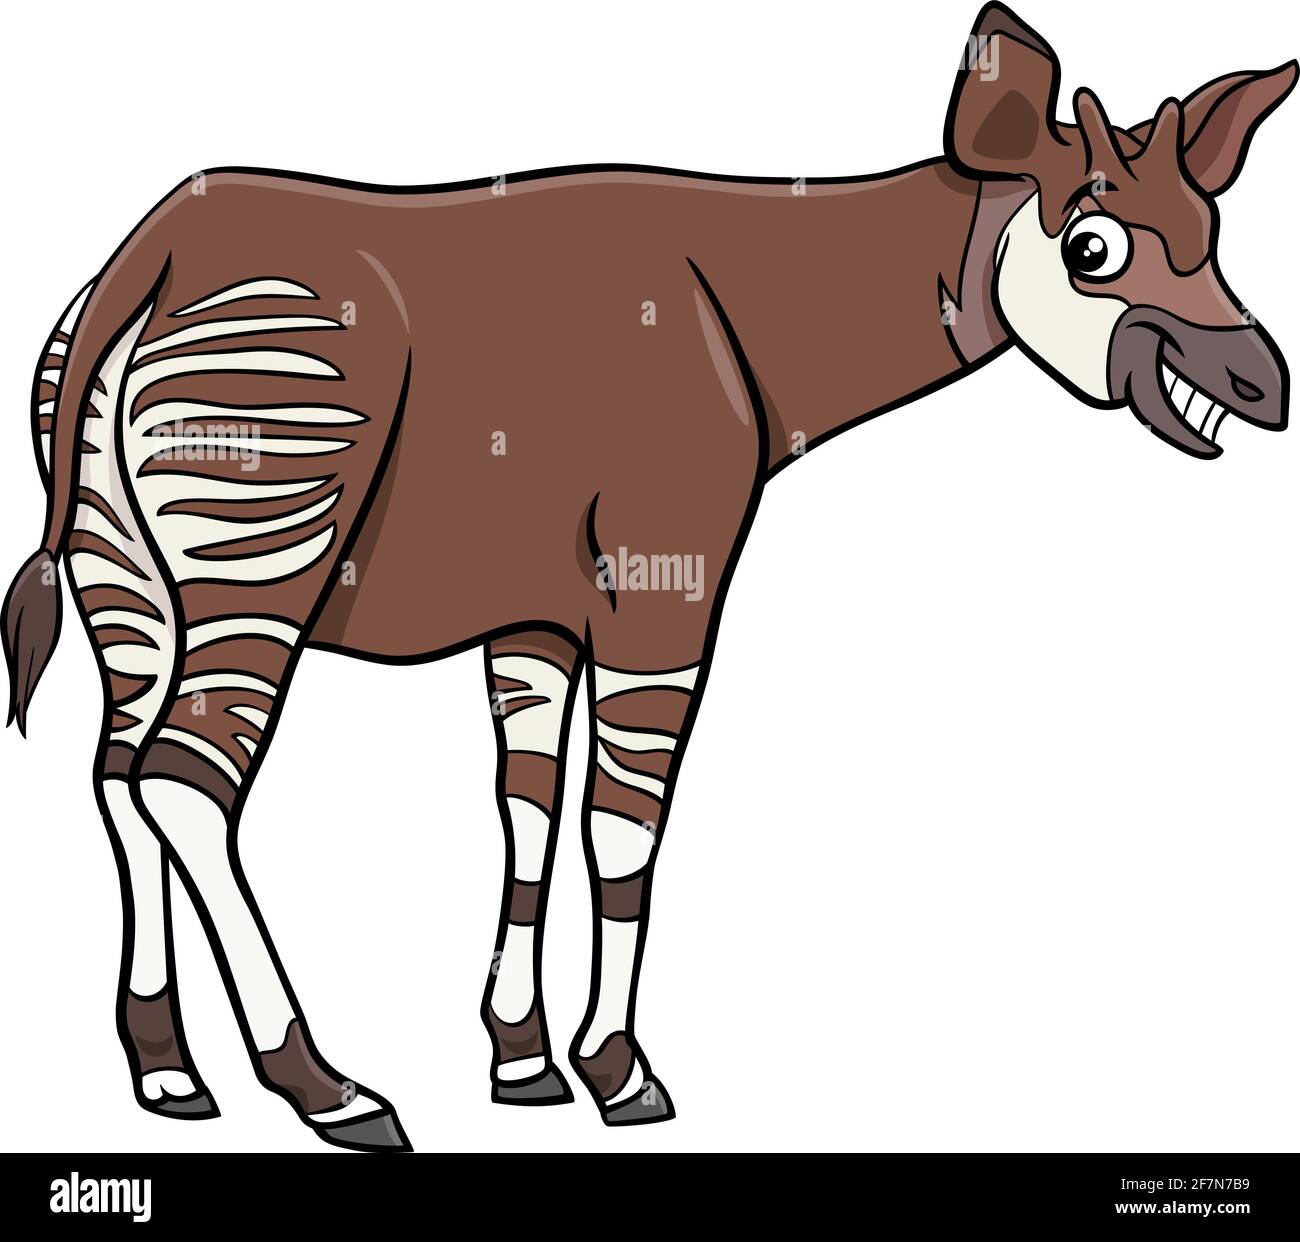 Cartoon illustration of funny okapi comic animal character Stock Vector